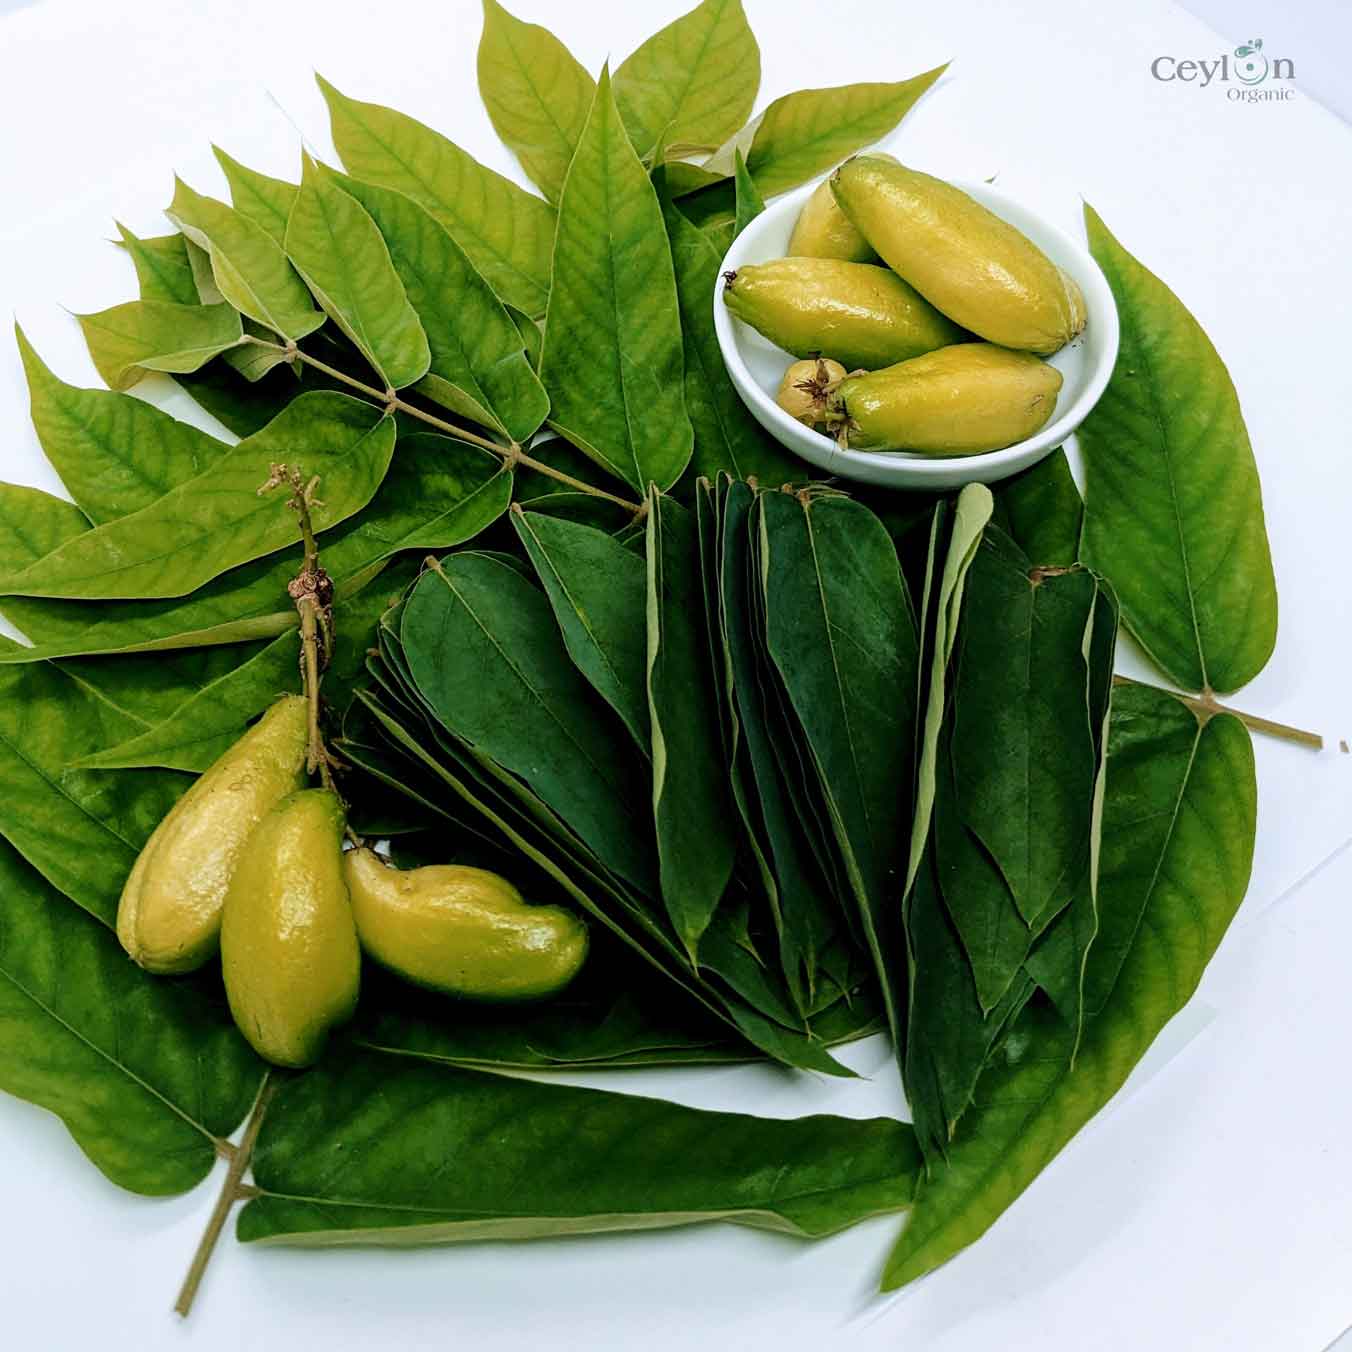 500+ Dried  Averrhoa Bilimbi Leaves, kamias leaves | ceylon organic-3